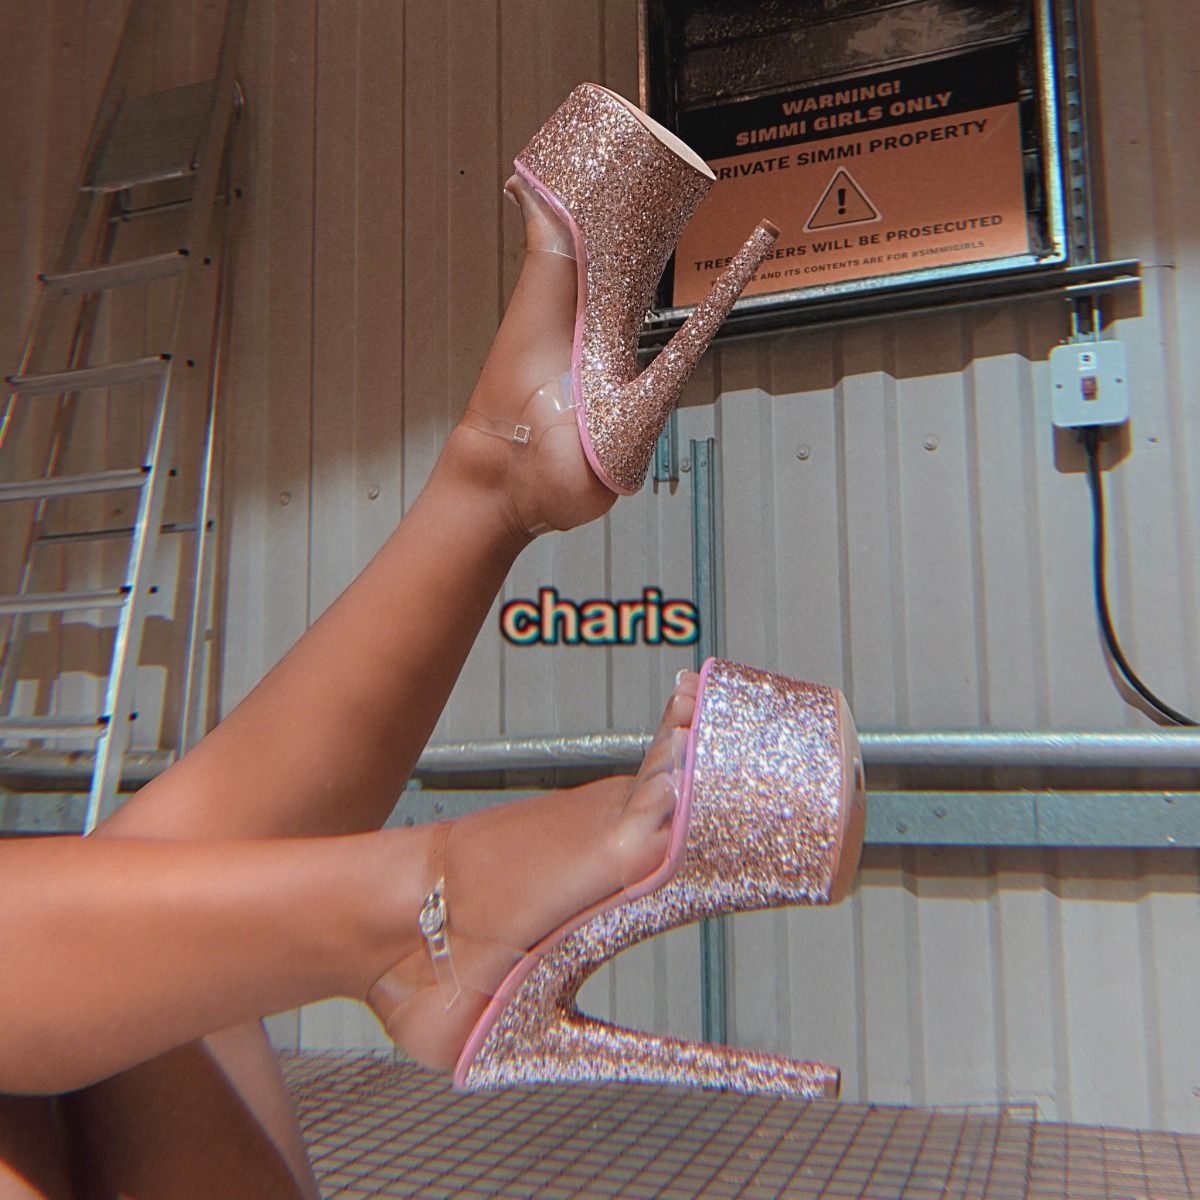 pink glitter platform heels